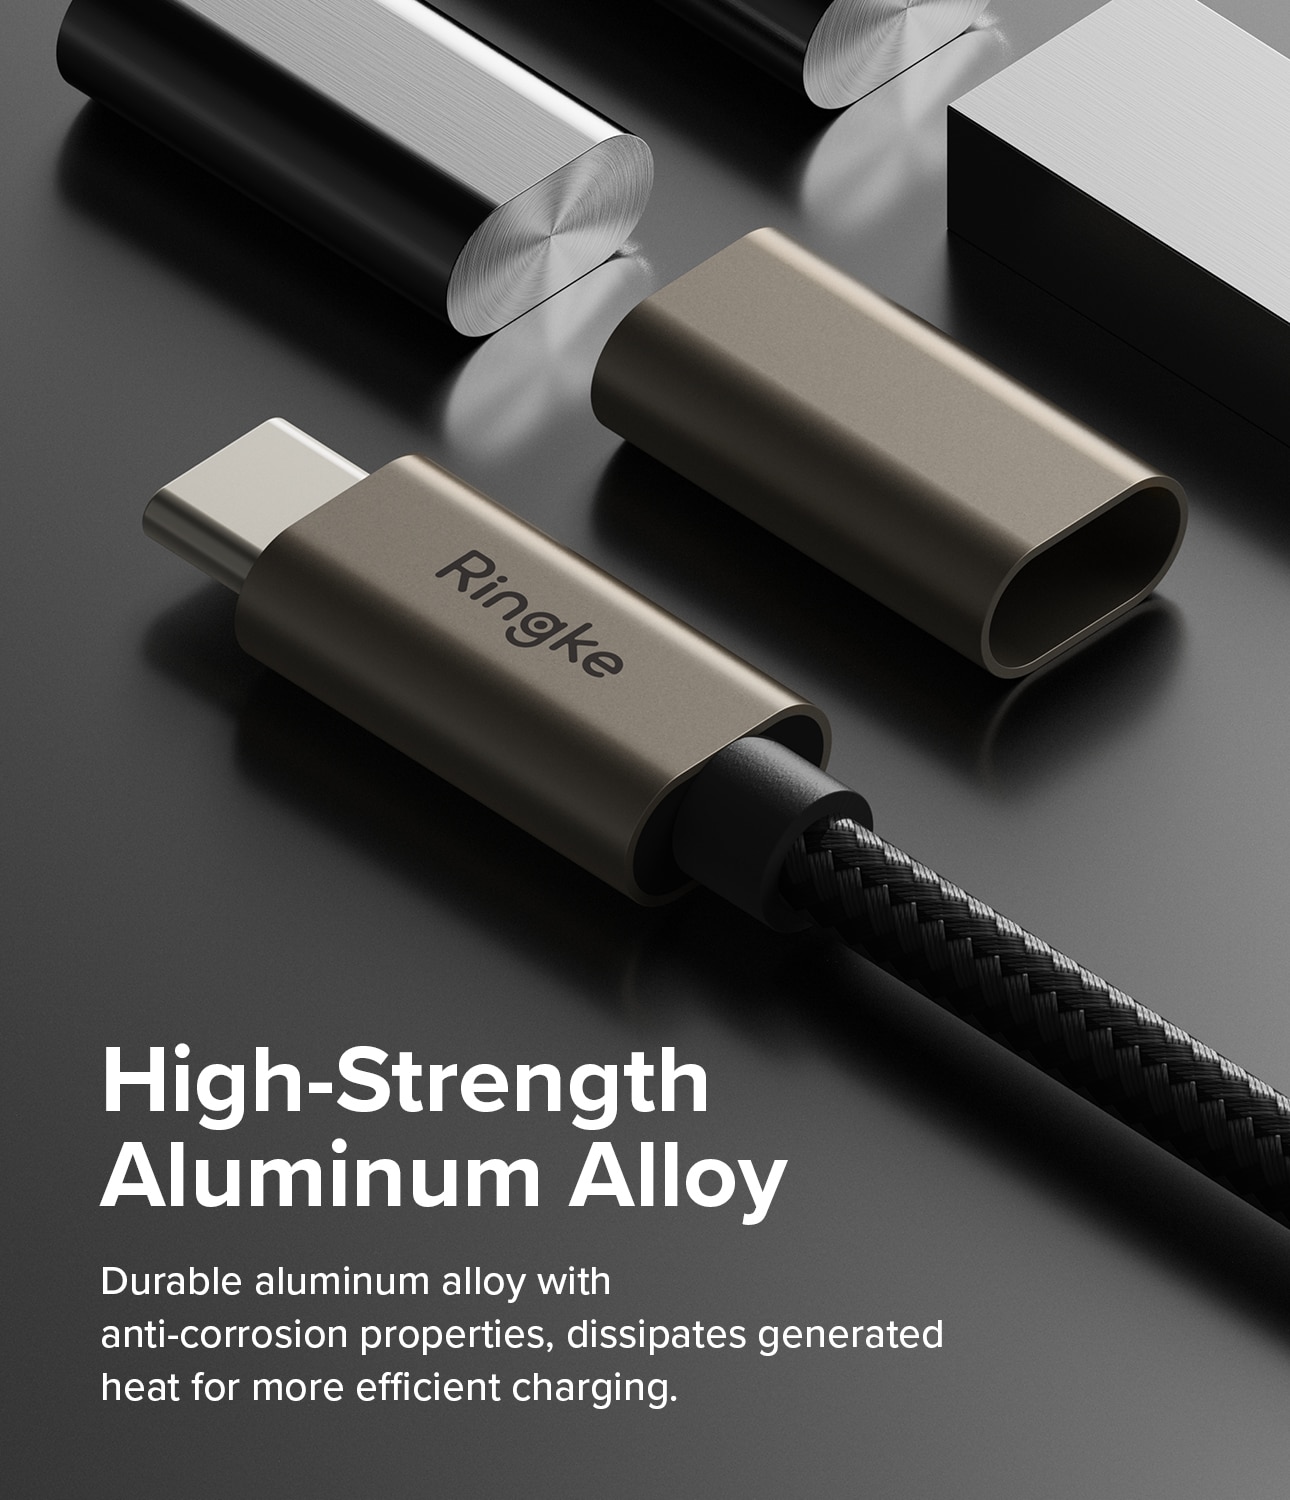 Fast Charging Basic Câble USB-C -> USB-C 2m, noir